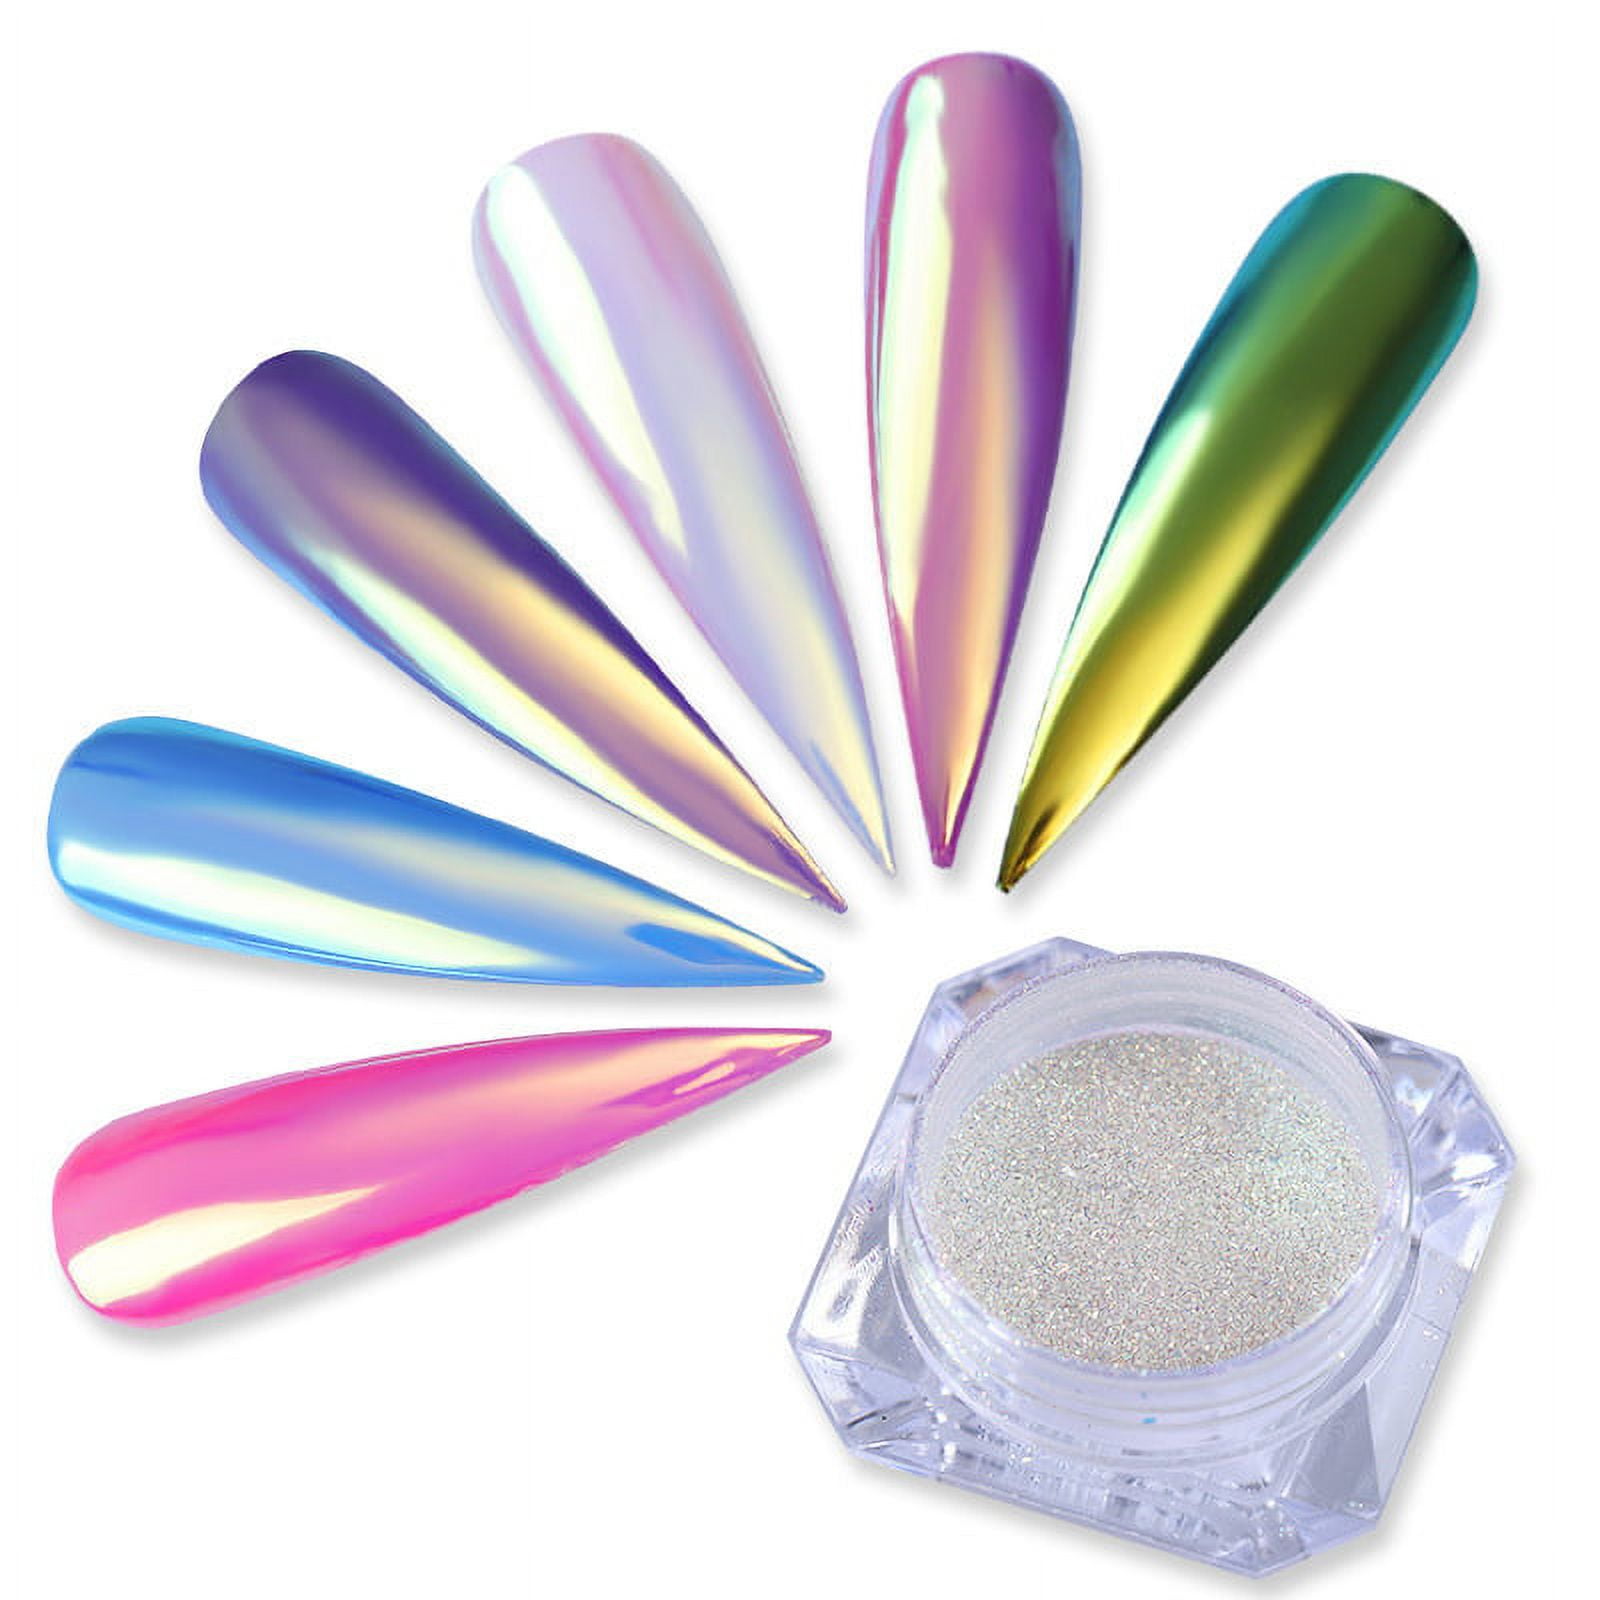 Unicorn Chrome Nail Powder, 1 Box Gold Aurora Powder, Iridescent Chrome  Powder Metallic Mirror Effect Pigment, Fairy Powder Mermaid Glitter Dust  Shell